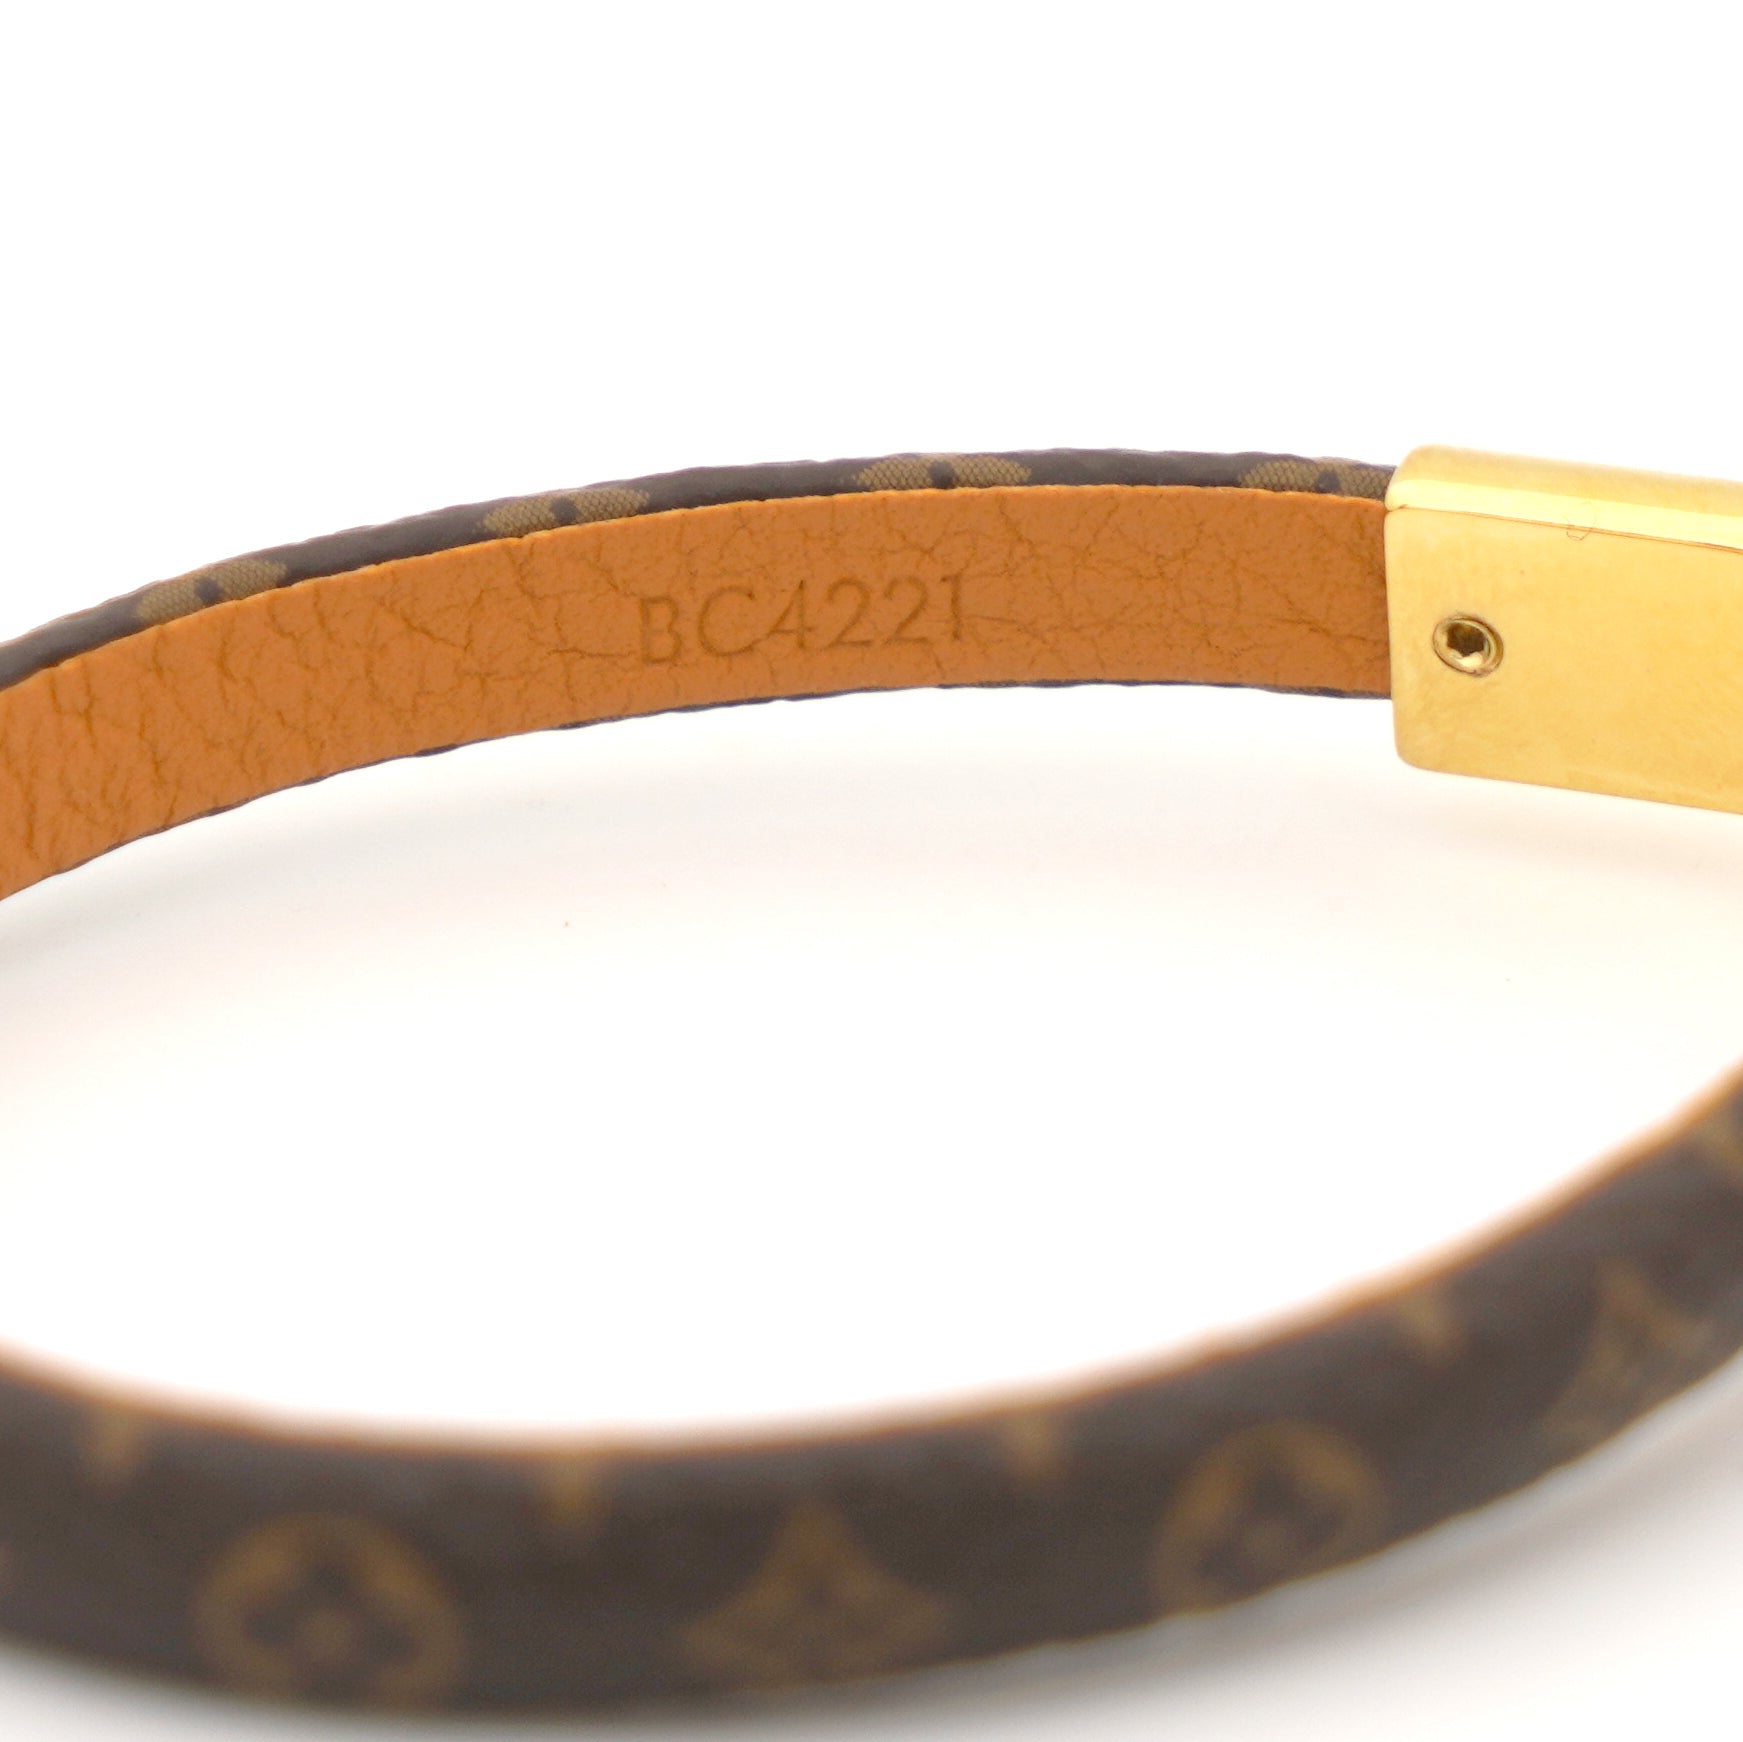 Vivienne Monogram Bracelet